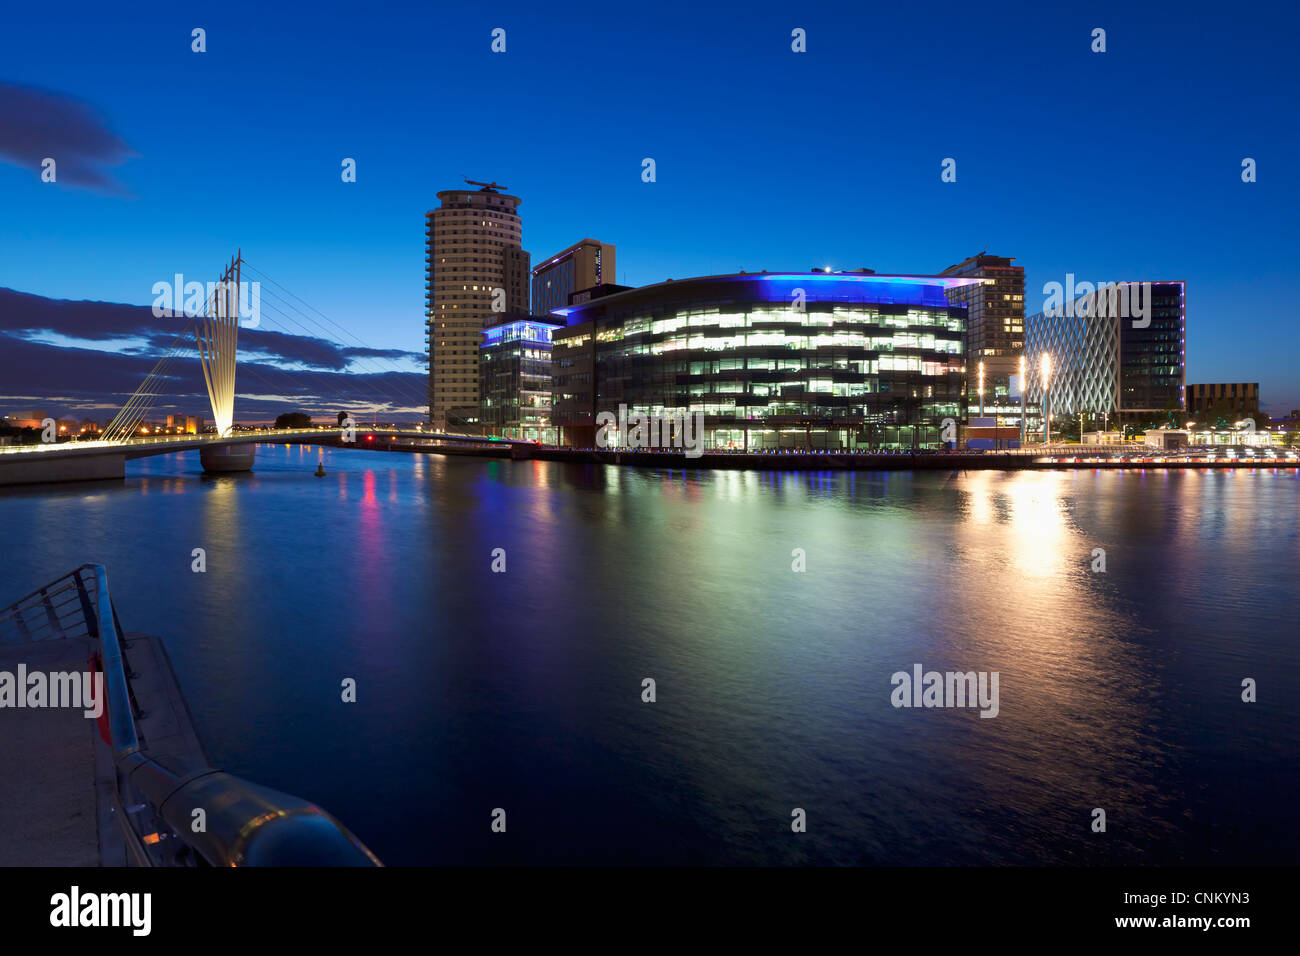 Media City UK at night, Salford Quays, Manchester, England Stock Photo